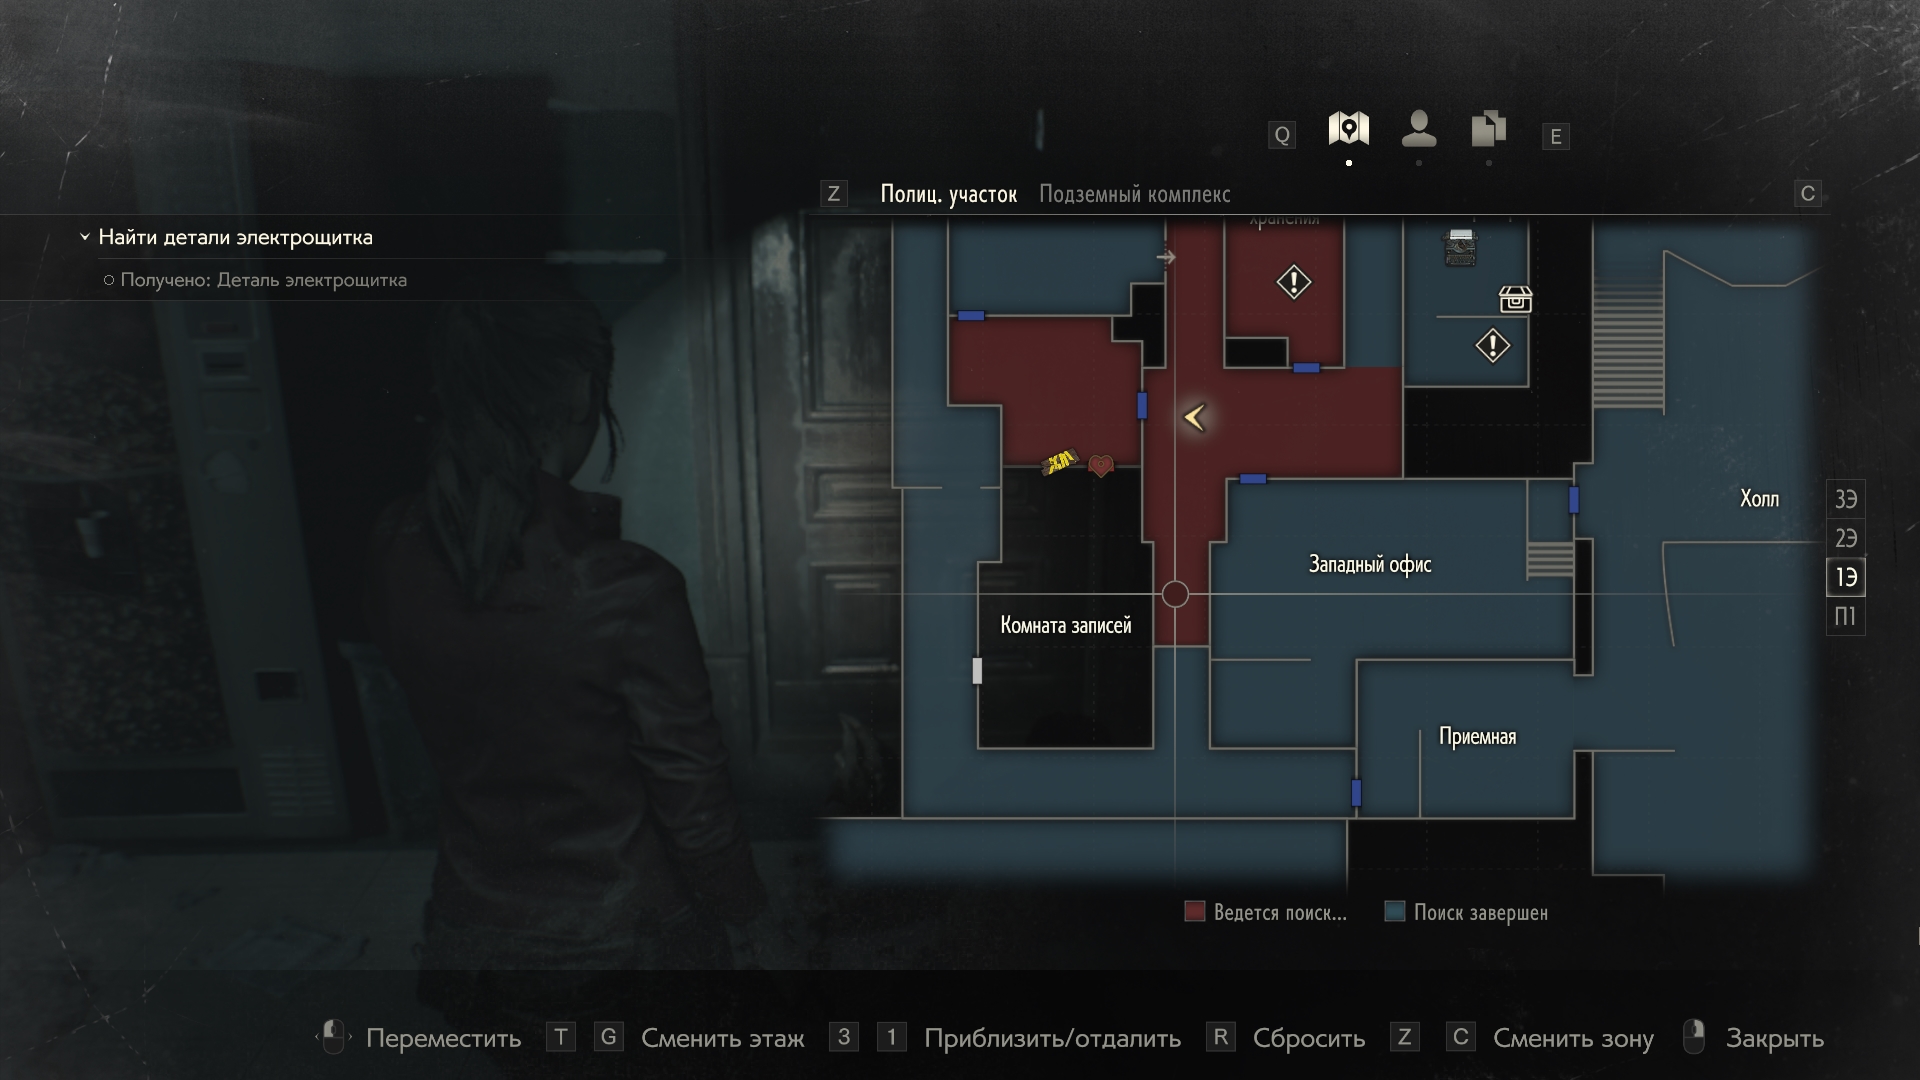 Резидент 2 библиотека. Htpbltyn BDTK rfhnf 2 ремейк. Resident Evil 2 Remake Клэр карта. Операционная комната Resident Evil 2 Remake. Карта резидент ивел 2 ремейк.